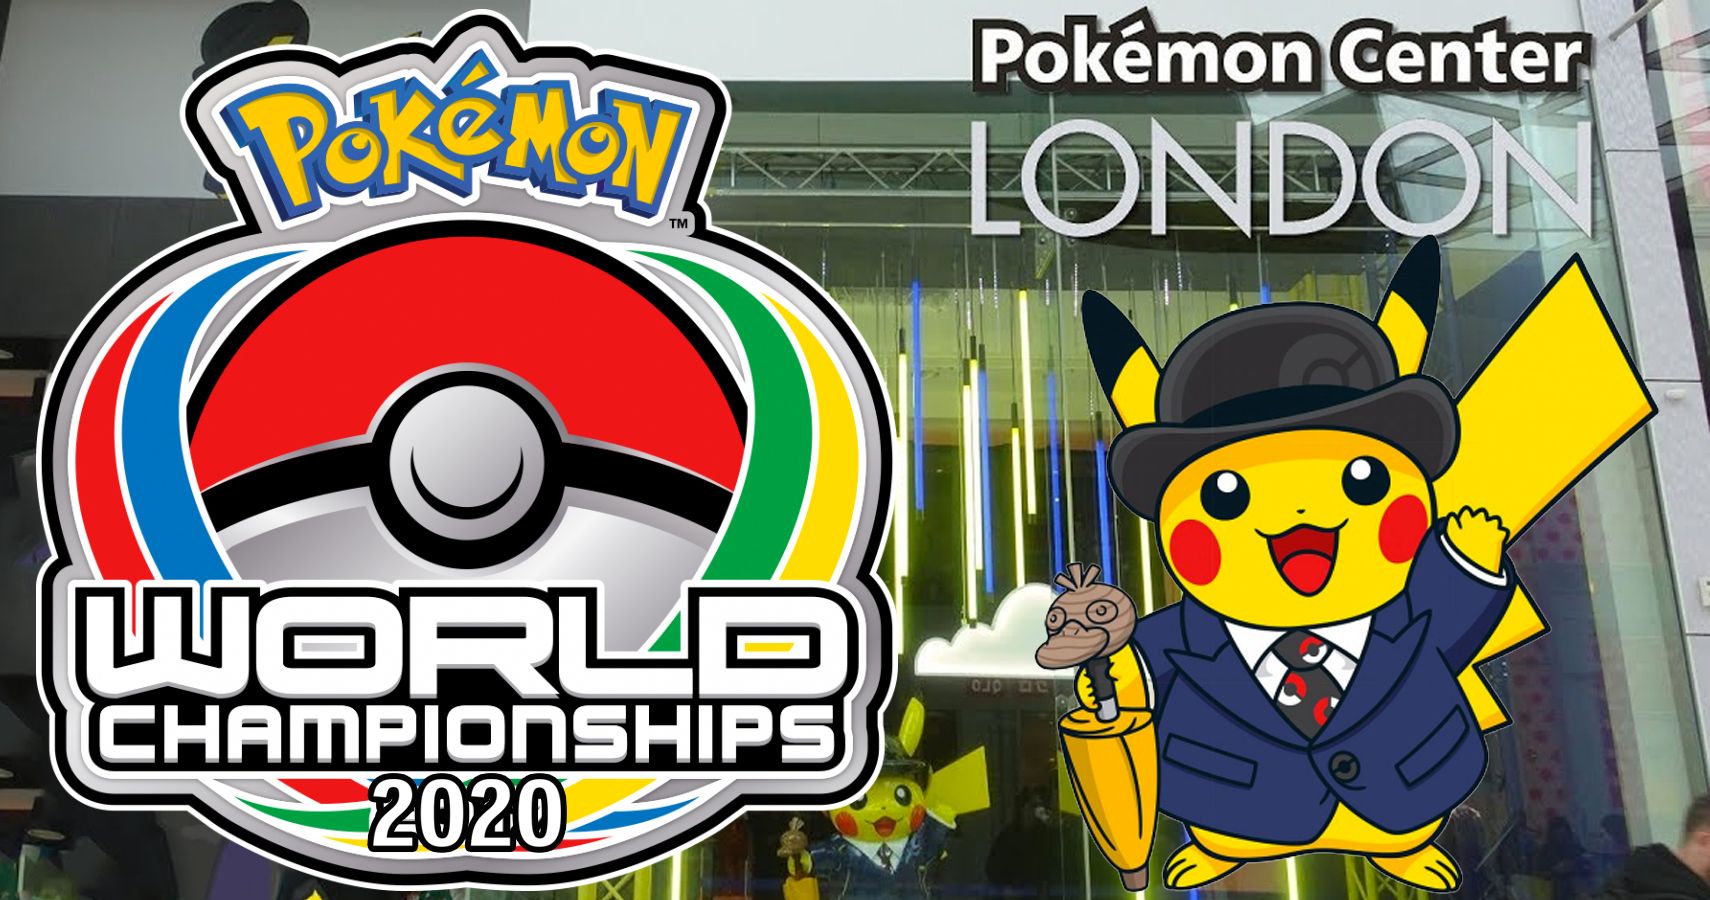 Temporary London Pokémon Center Will Return Next Year For Pokémon World Championships